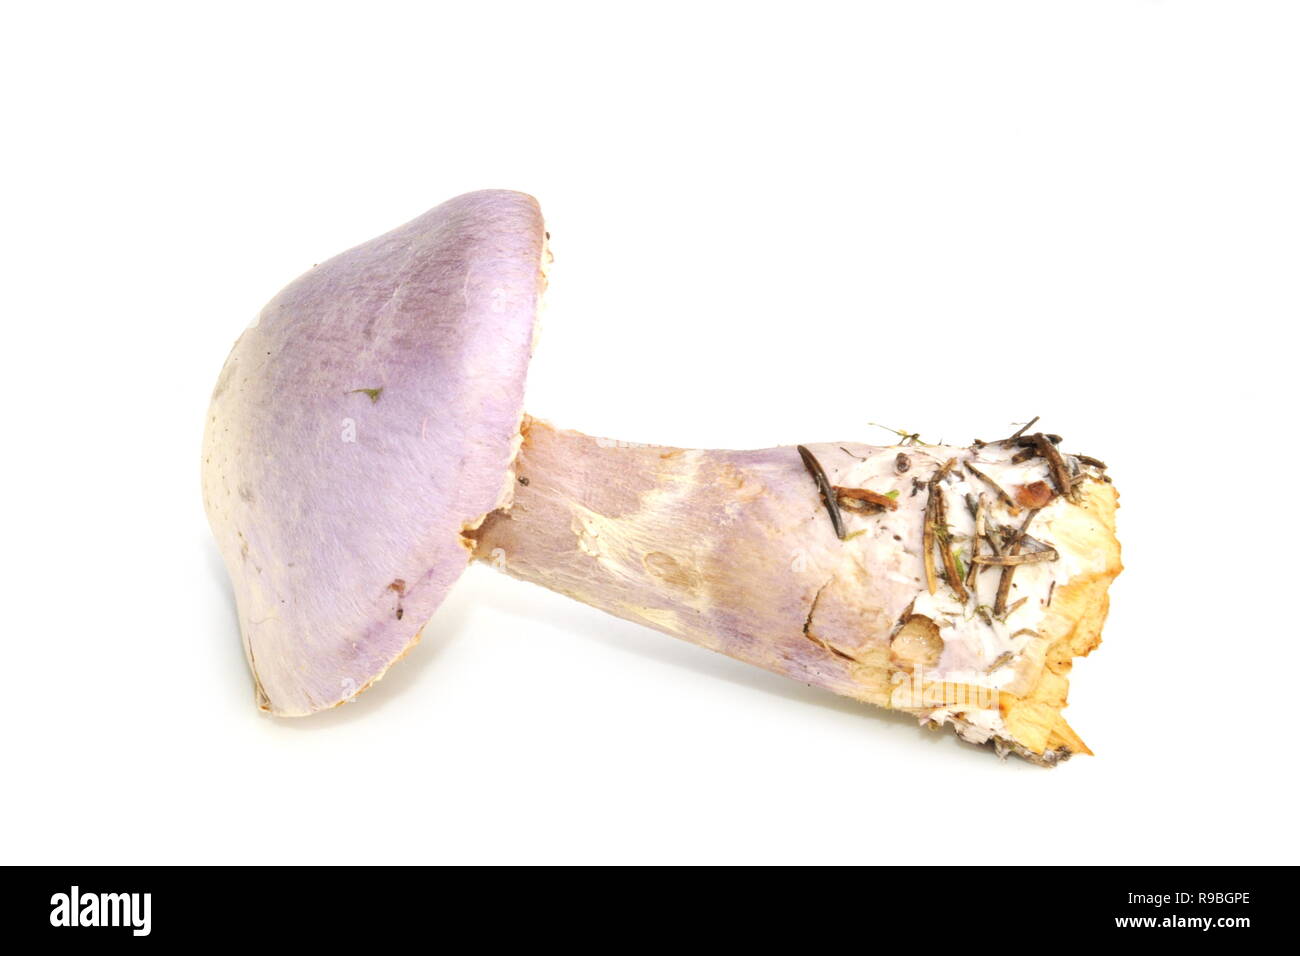 Gassy webcap fungus Cortinarius traganus isolated on white background Stock Photo